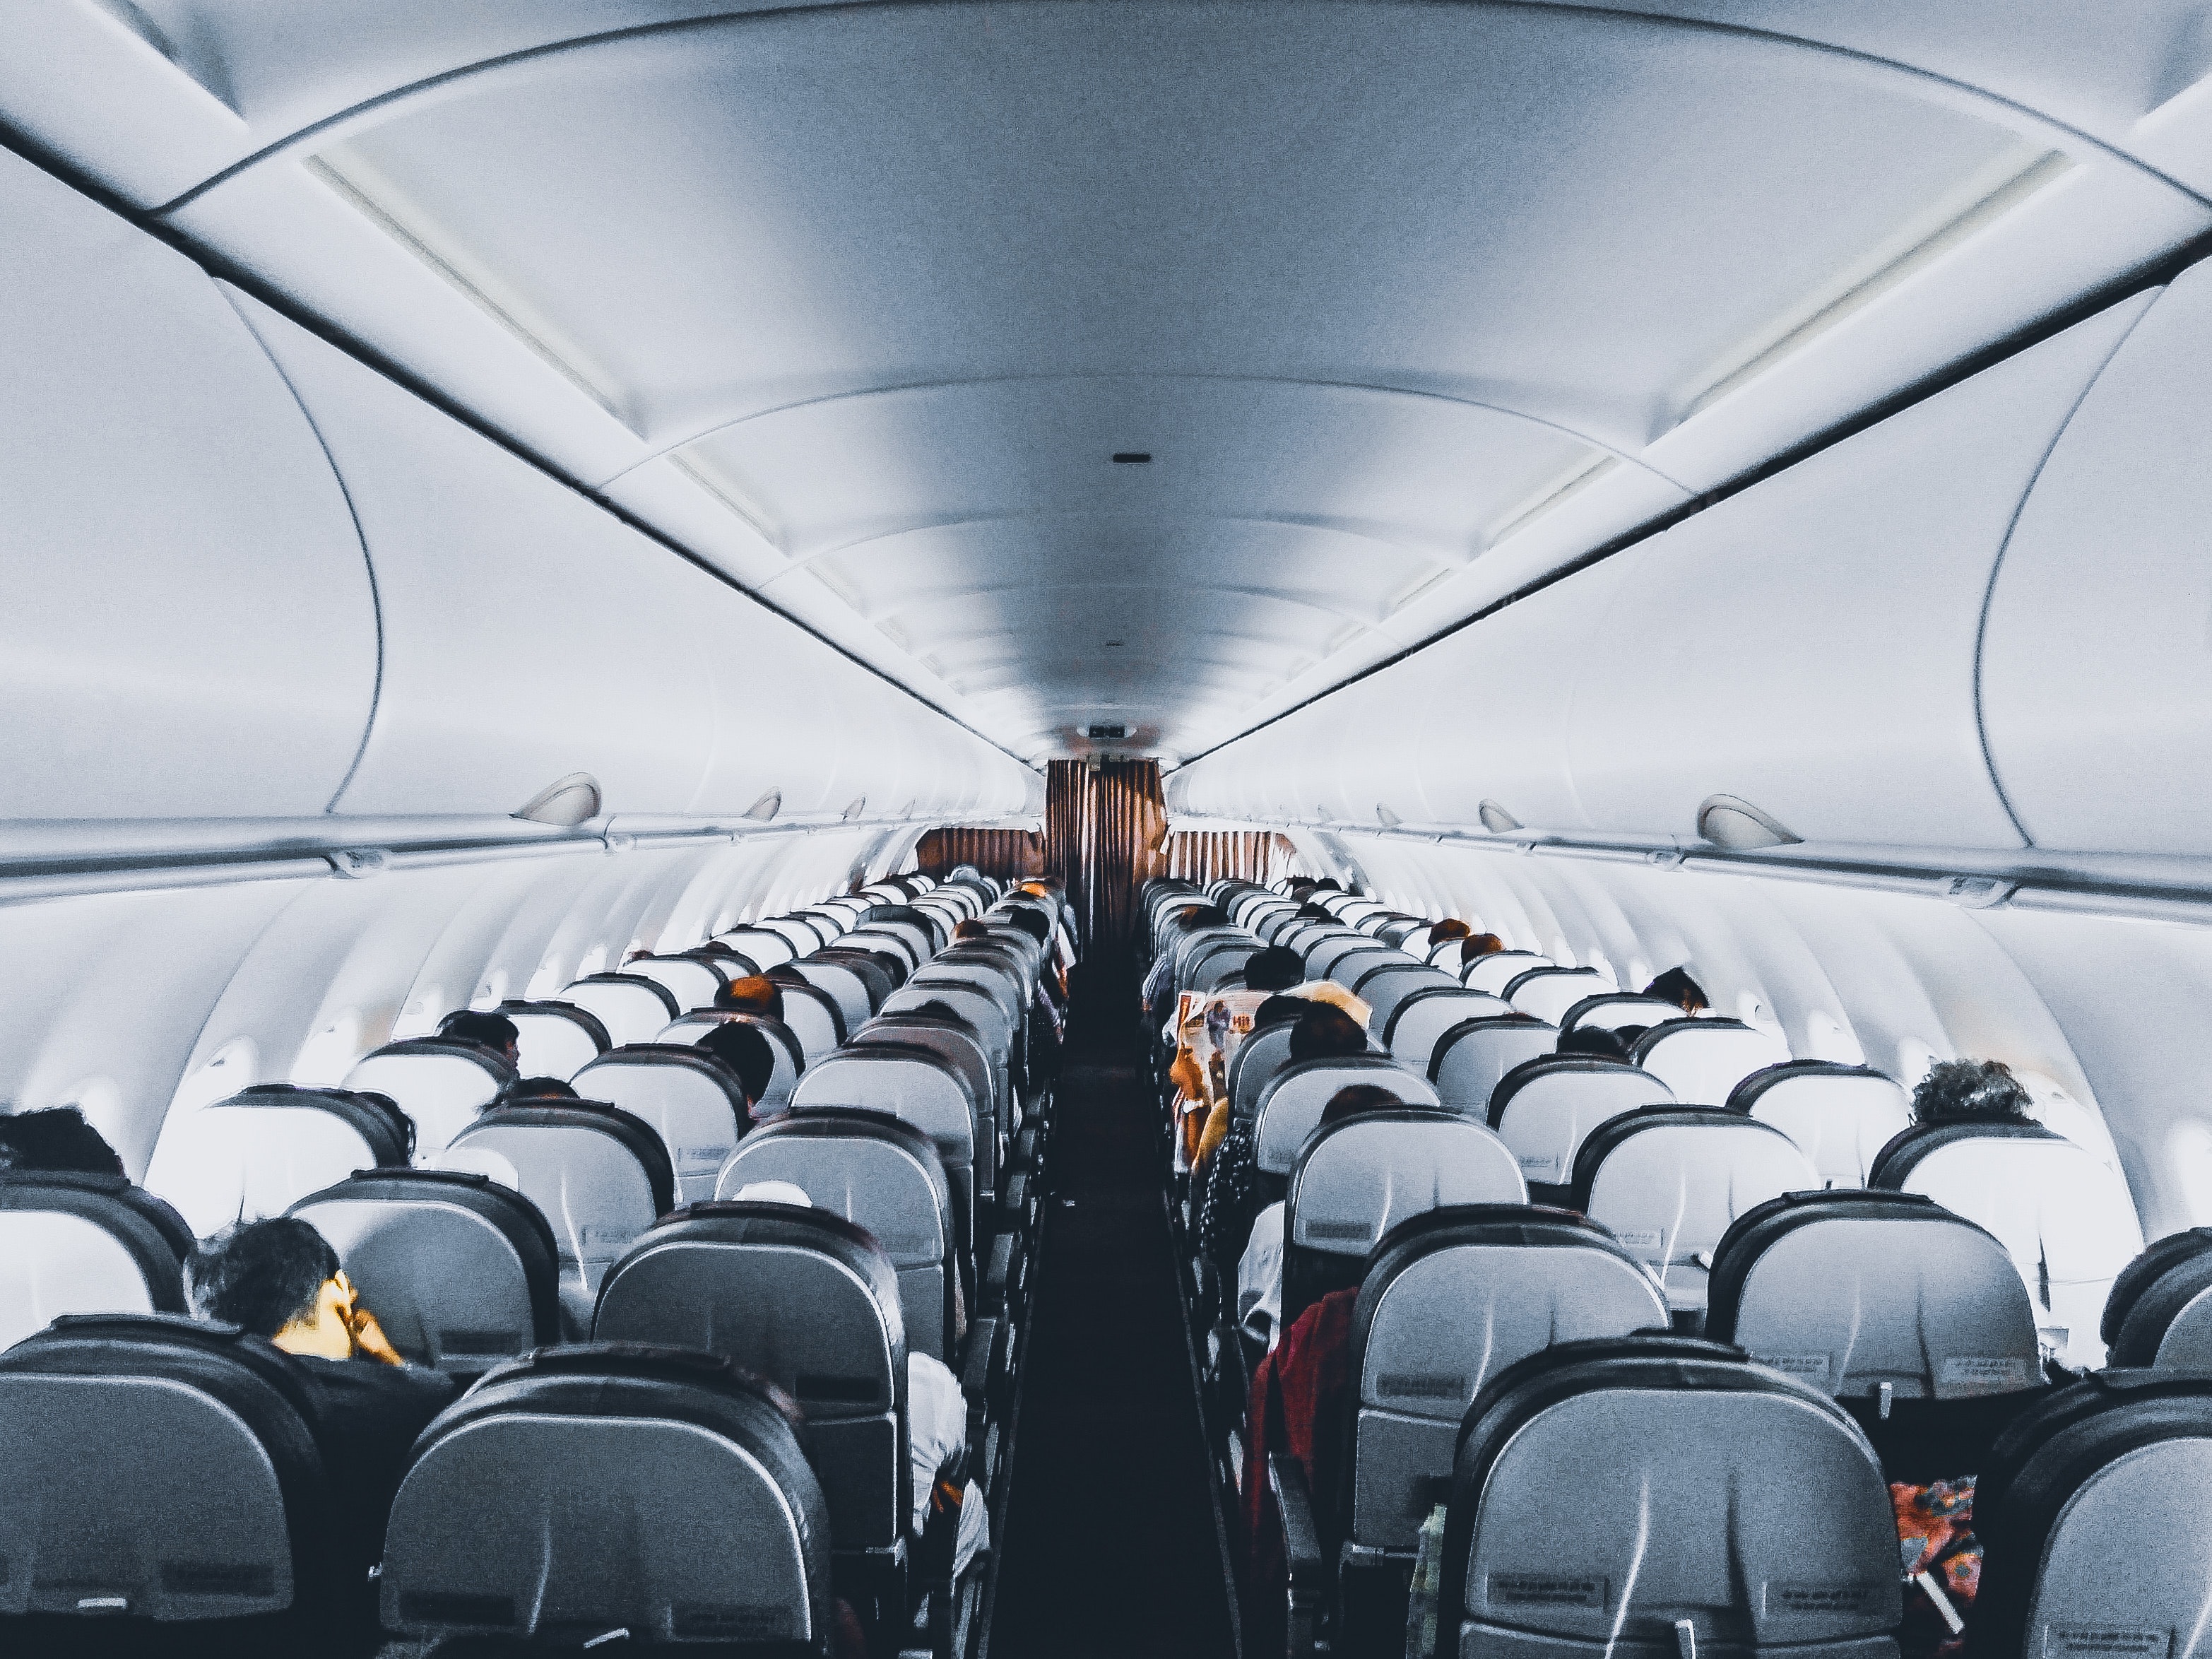 10 FAQ’s About Being a Flight Attendant